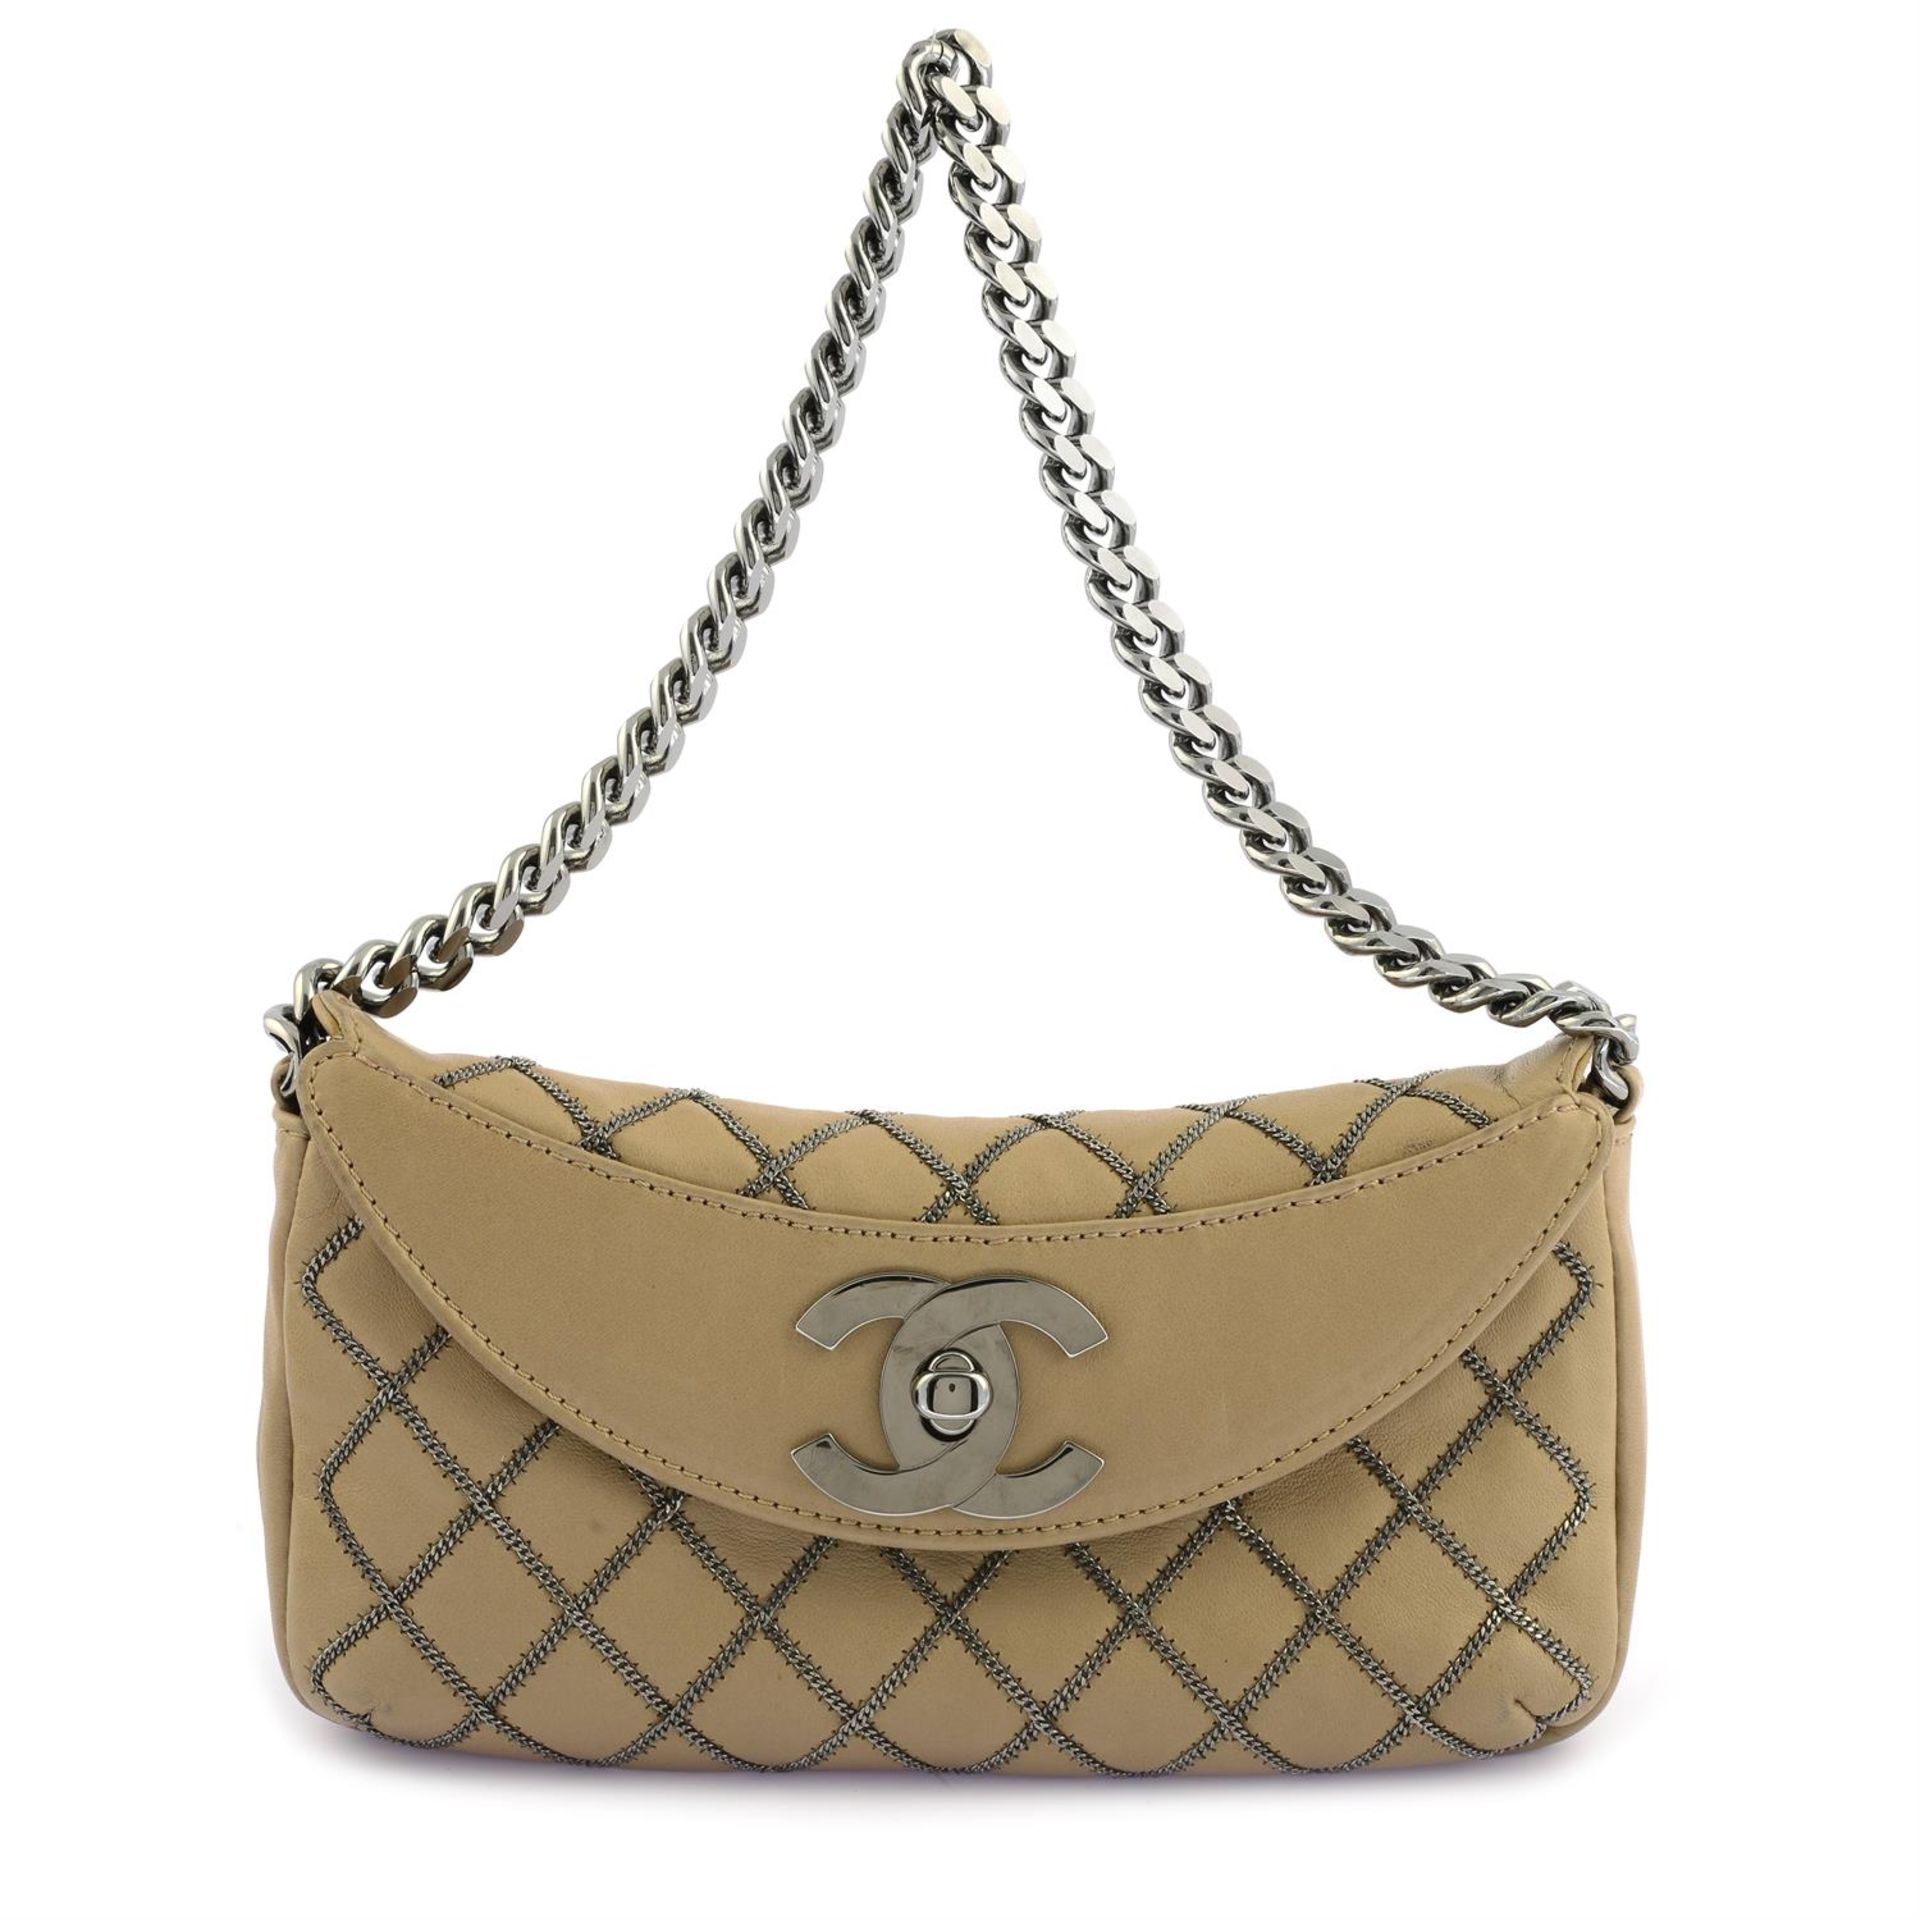 CHANEL - a beige leather chain stitch flap shoulder bag.